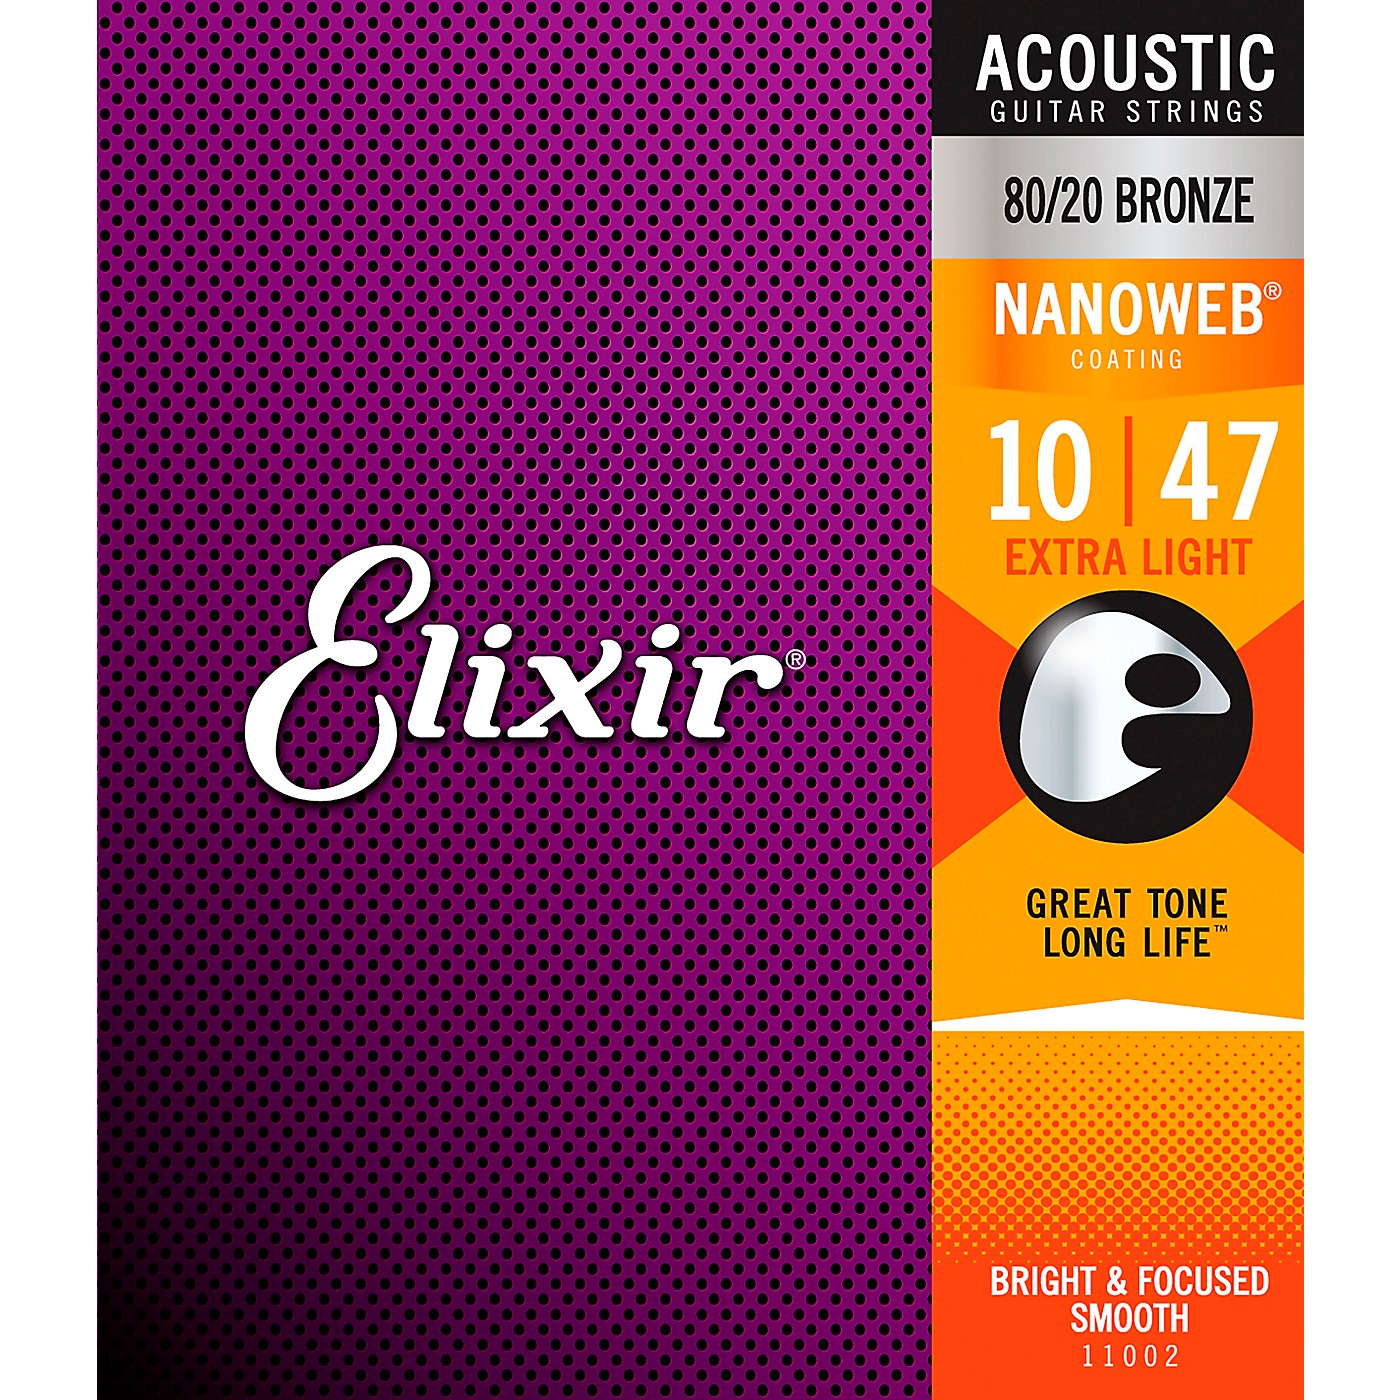 Elixir 80/20 Bronze Acoustic Guitar Strings with NANOWEB Coating, Extra Light (.010-.047) thumbnail